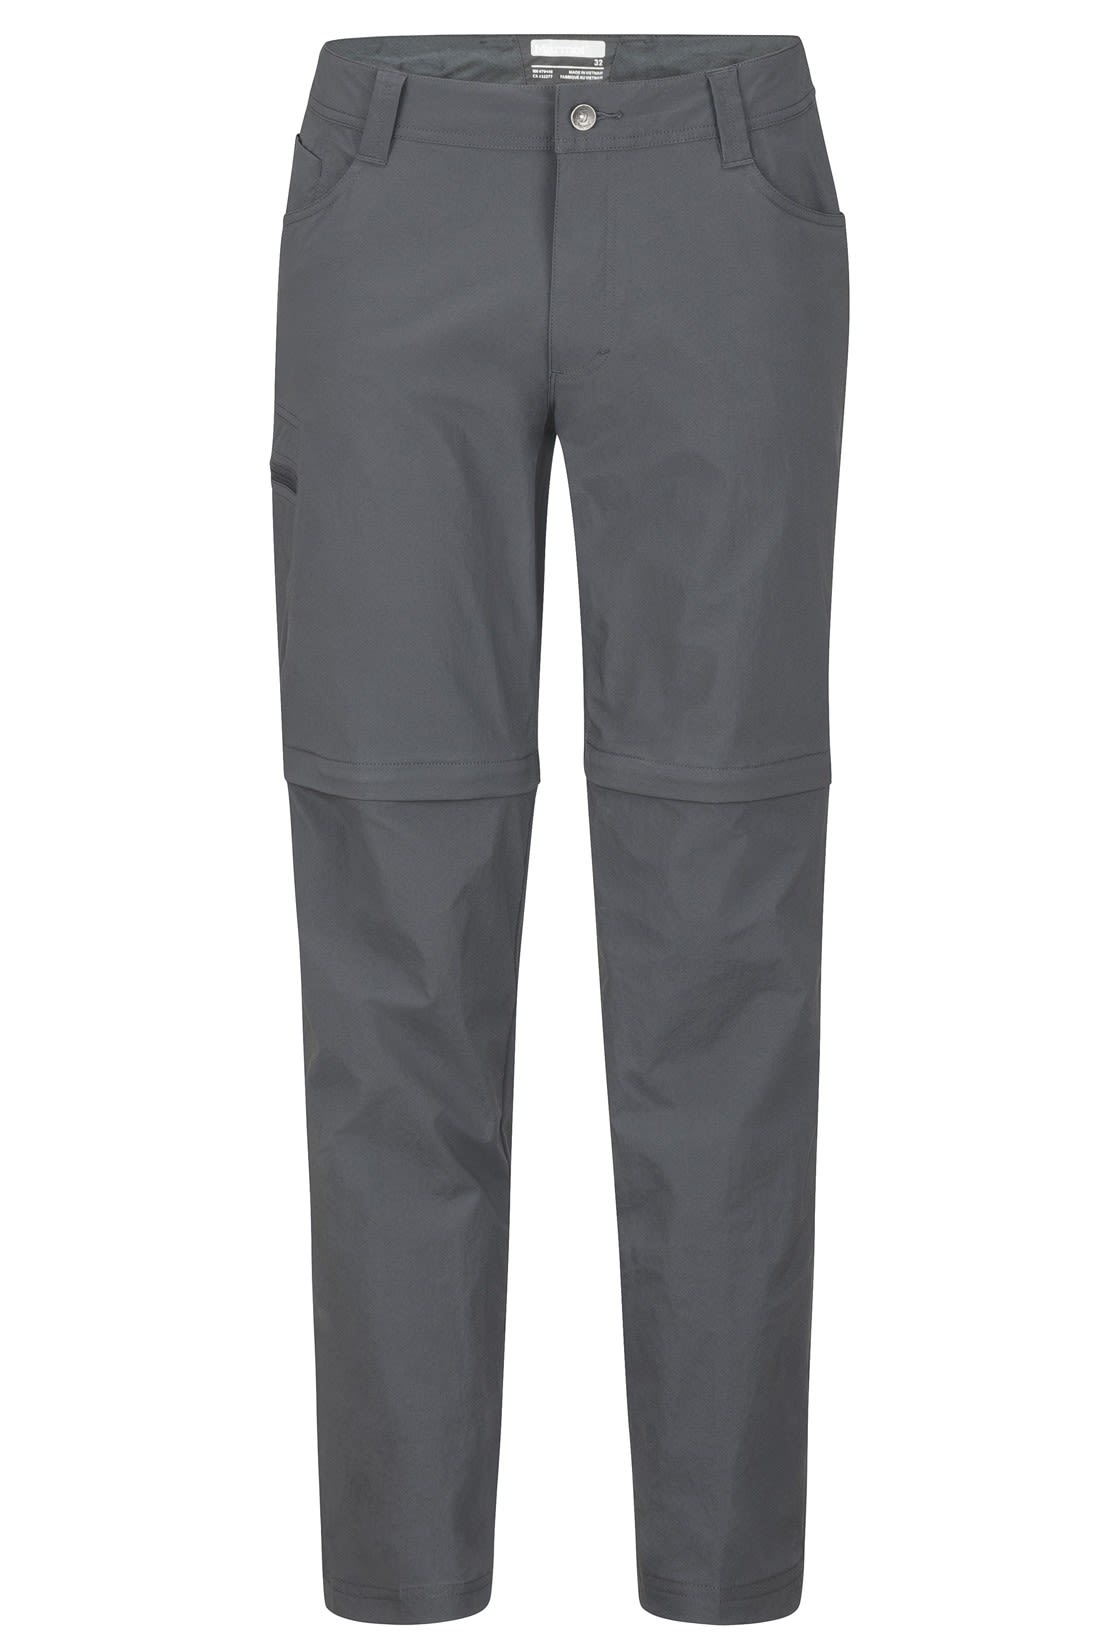 Marmot Transcend Convertible Pant Grau- Male Softshellhosen- Grsse 28 - Farbe Slate Grey